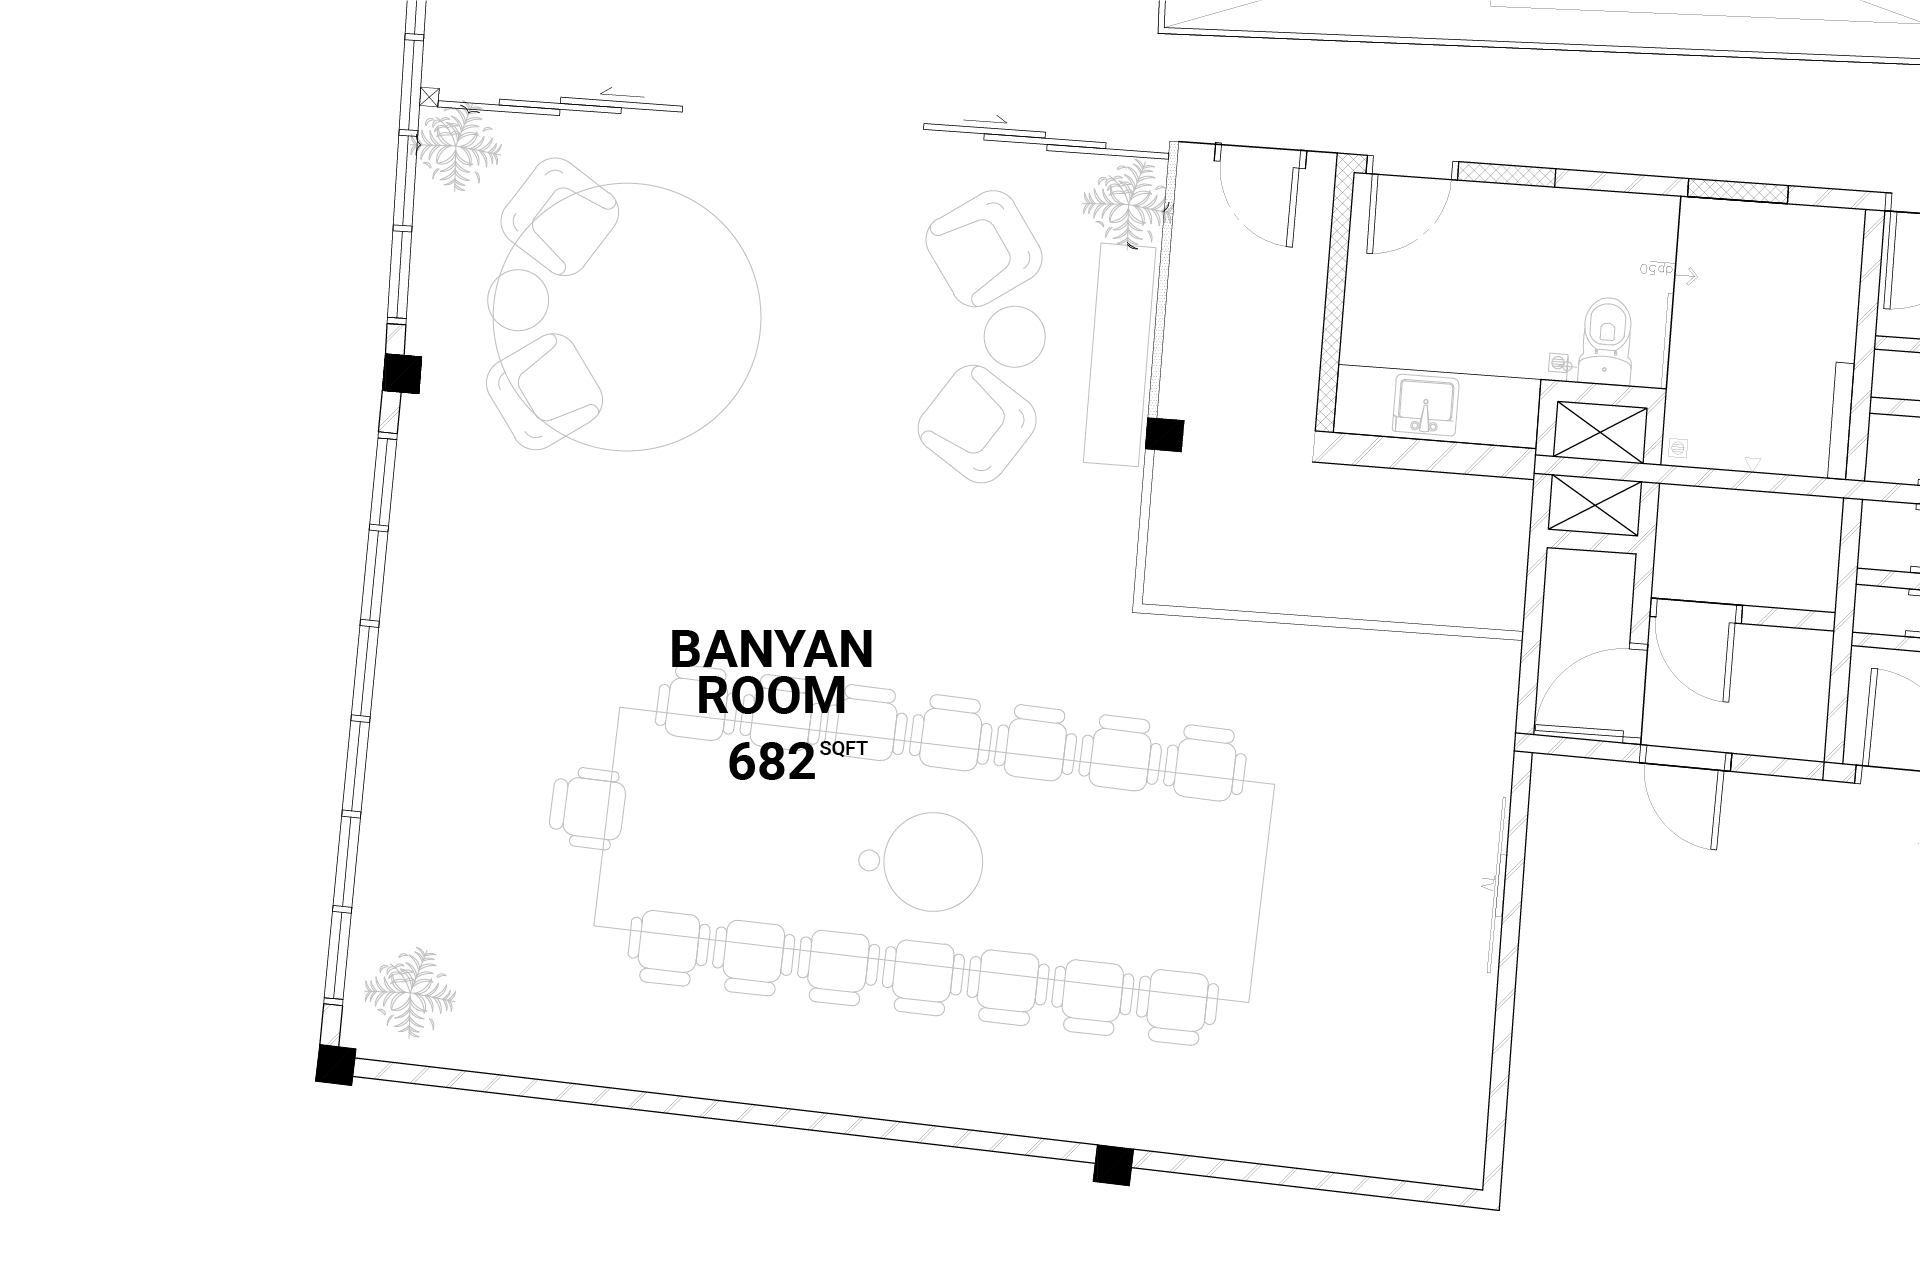 Banyan Room